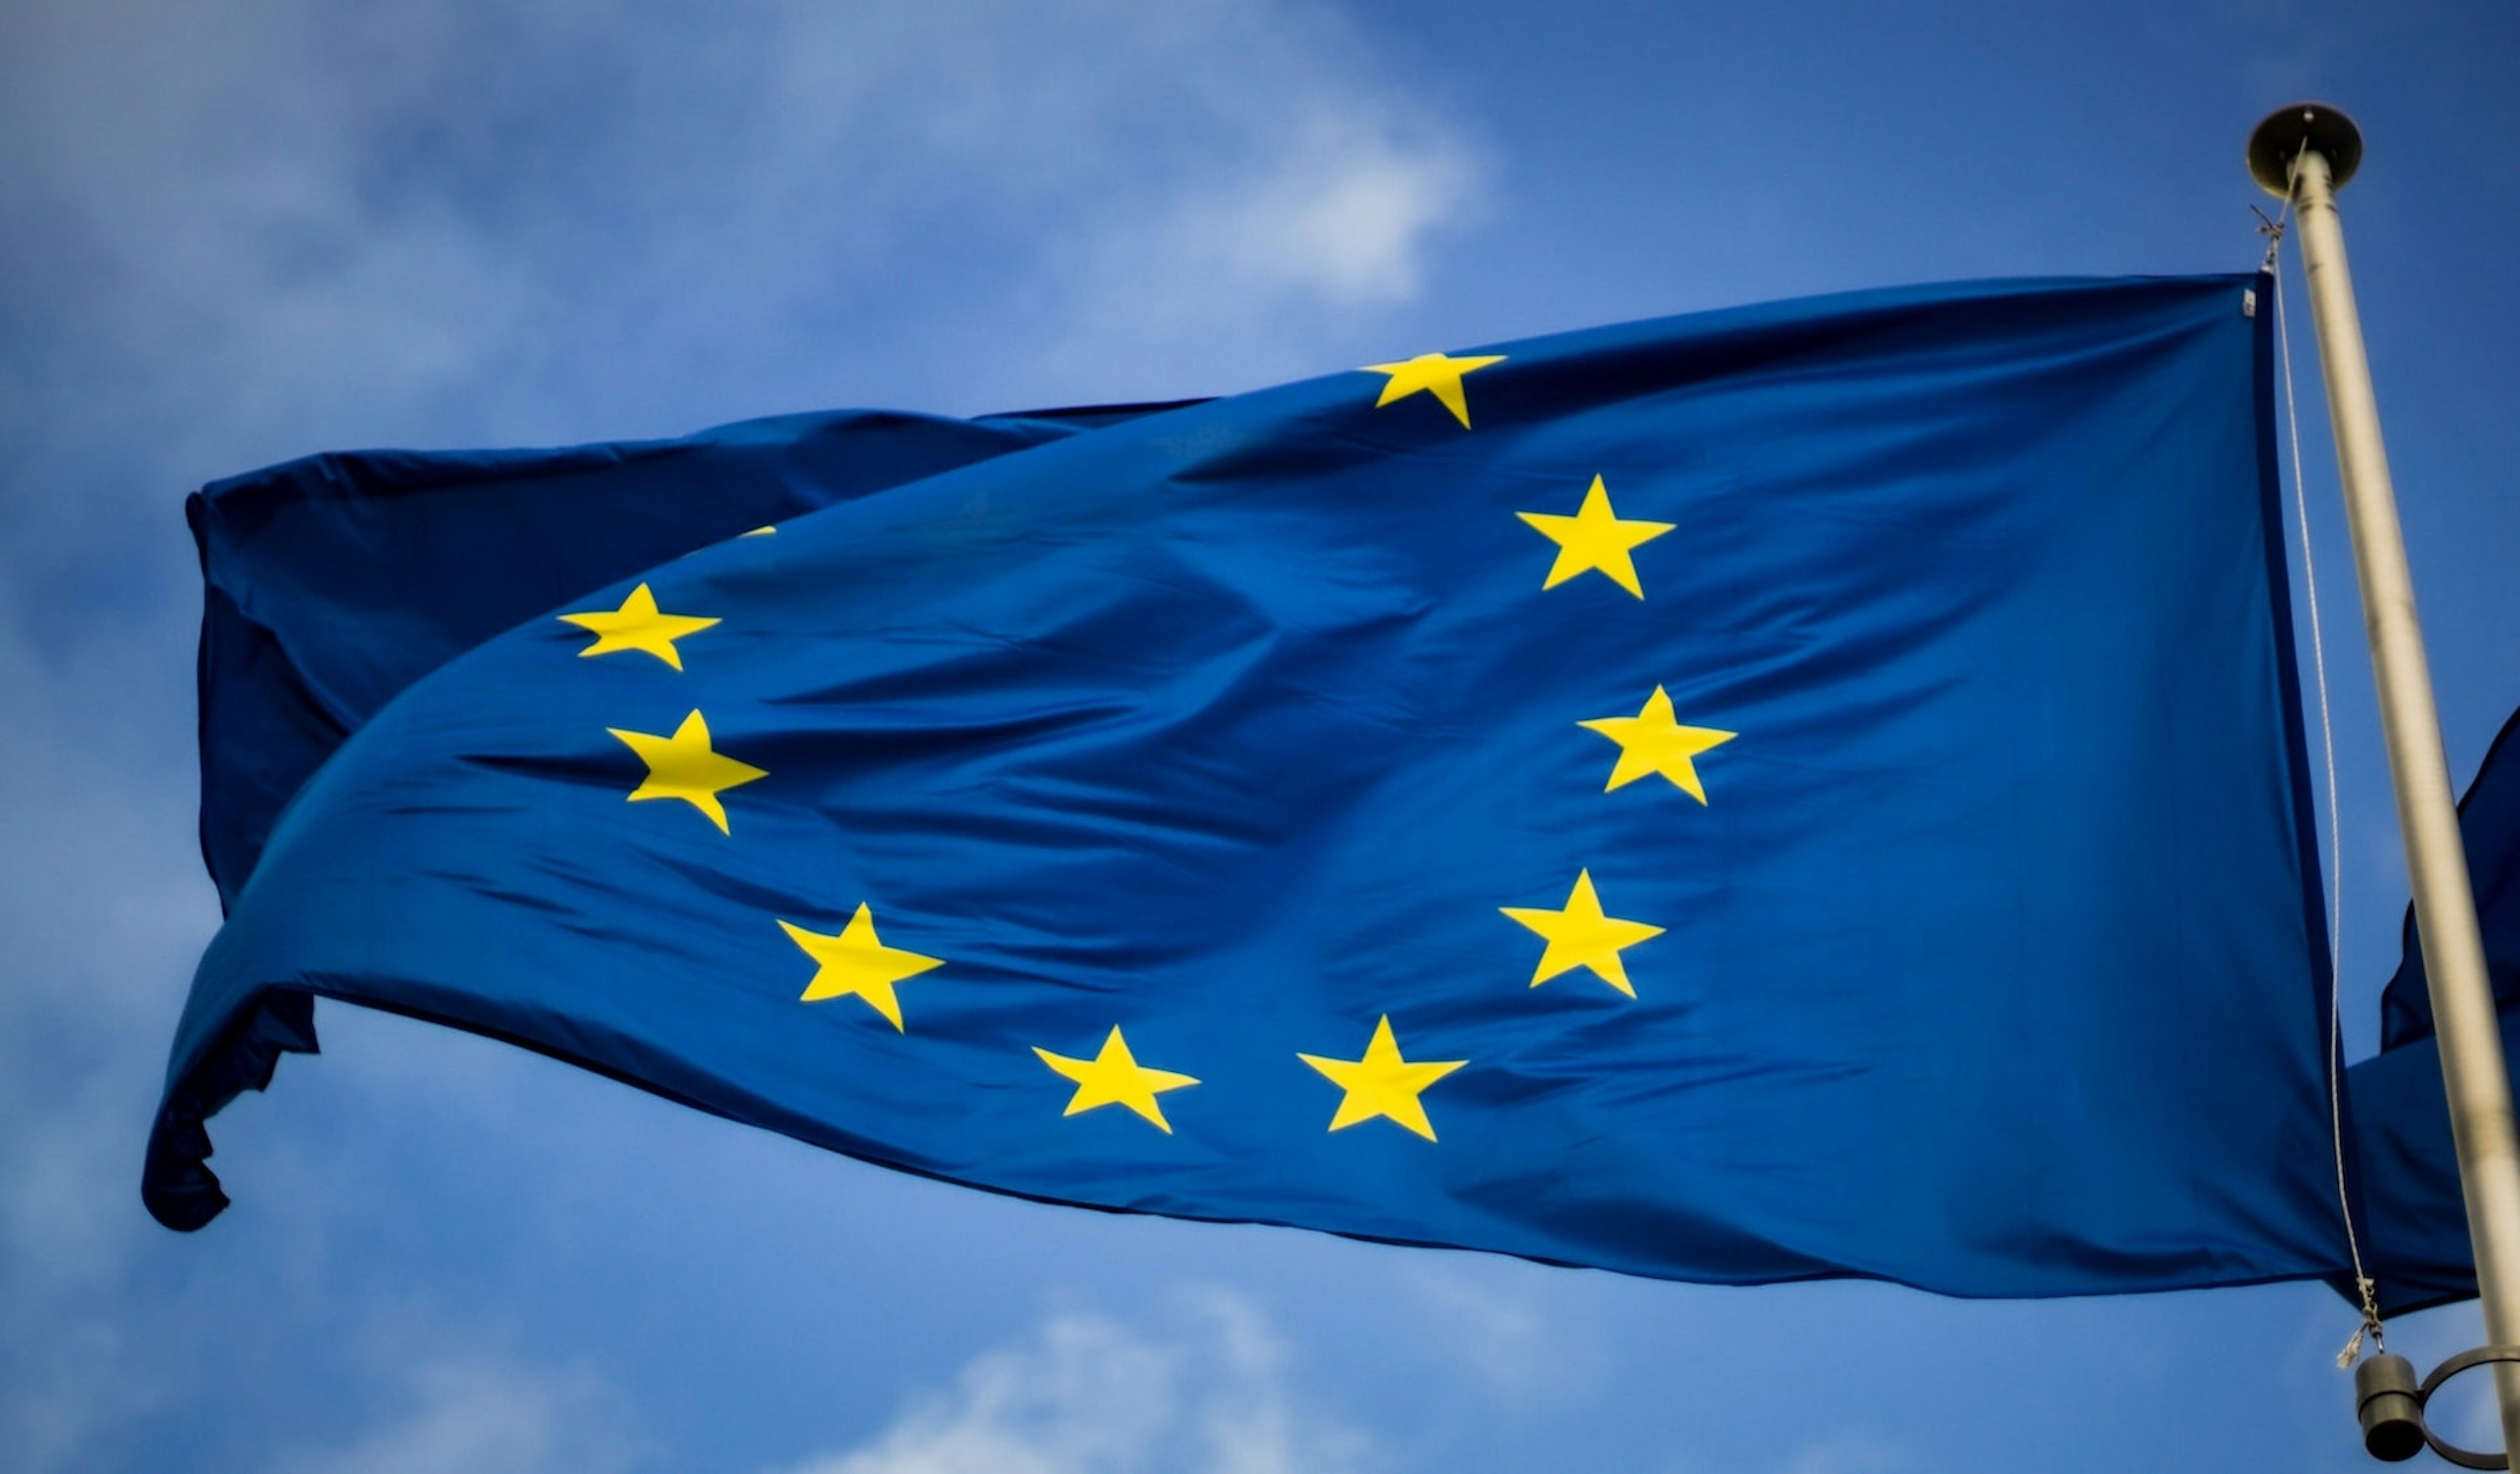 An image of the European Union flag